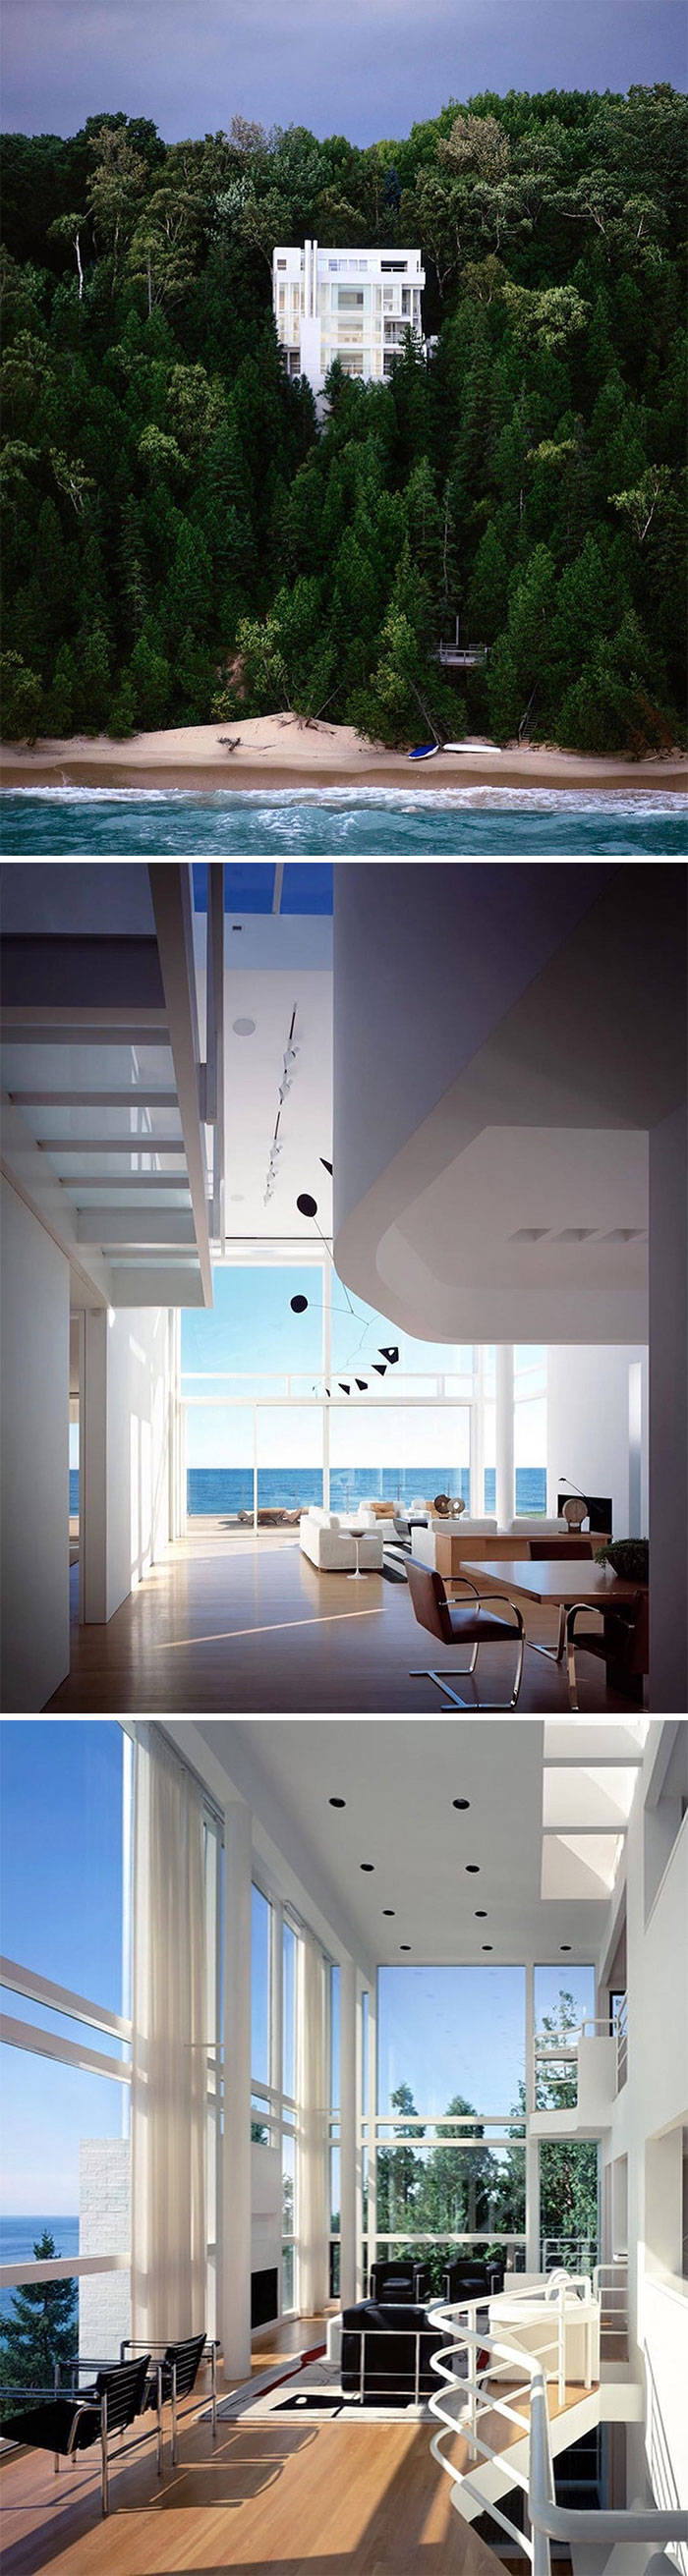 Douglas House By Richard Meier & Partners